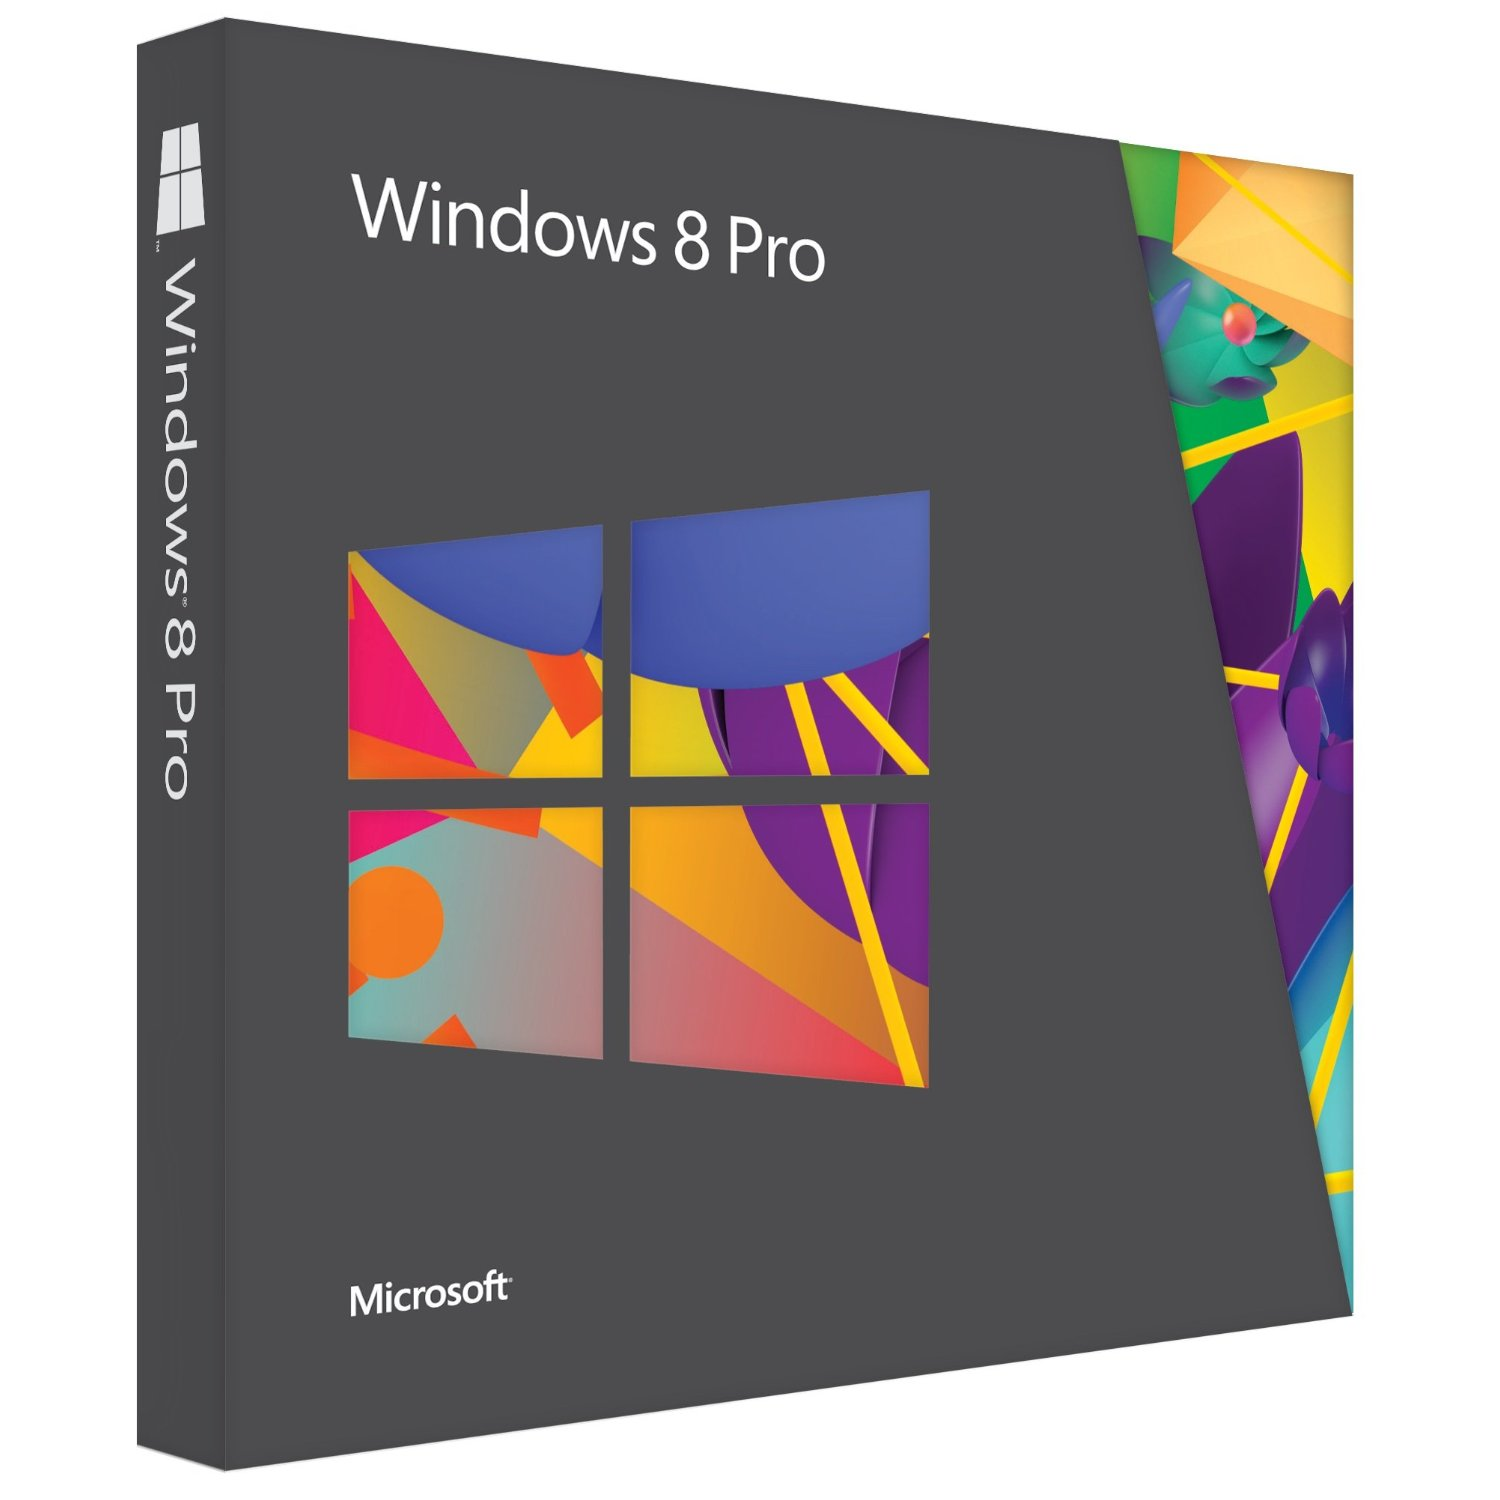 Windows 8 Professional [DVD Full] [ISO] x86 Via SkyDrive | SoftWareMaNiaco.com